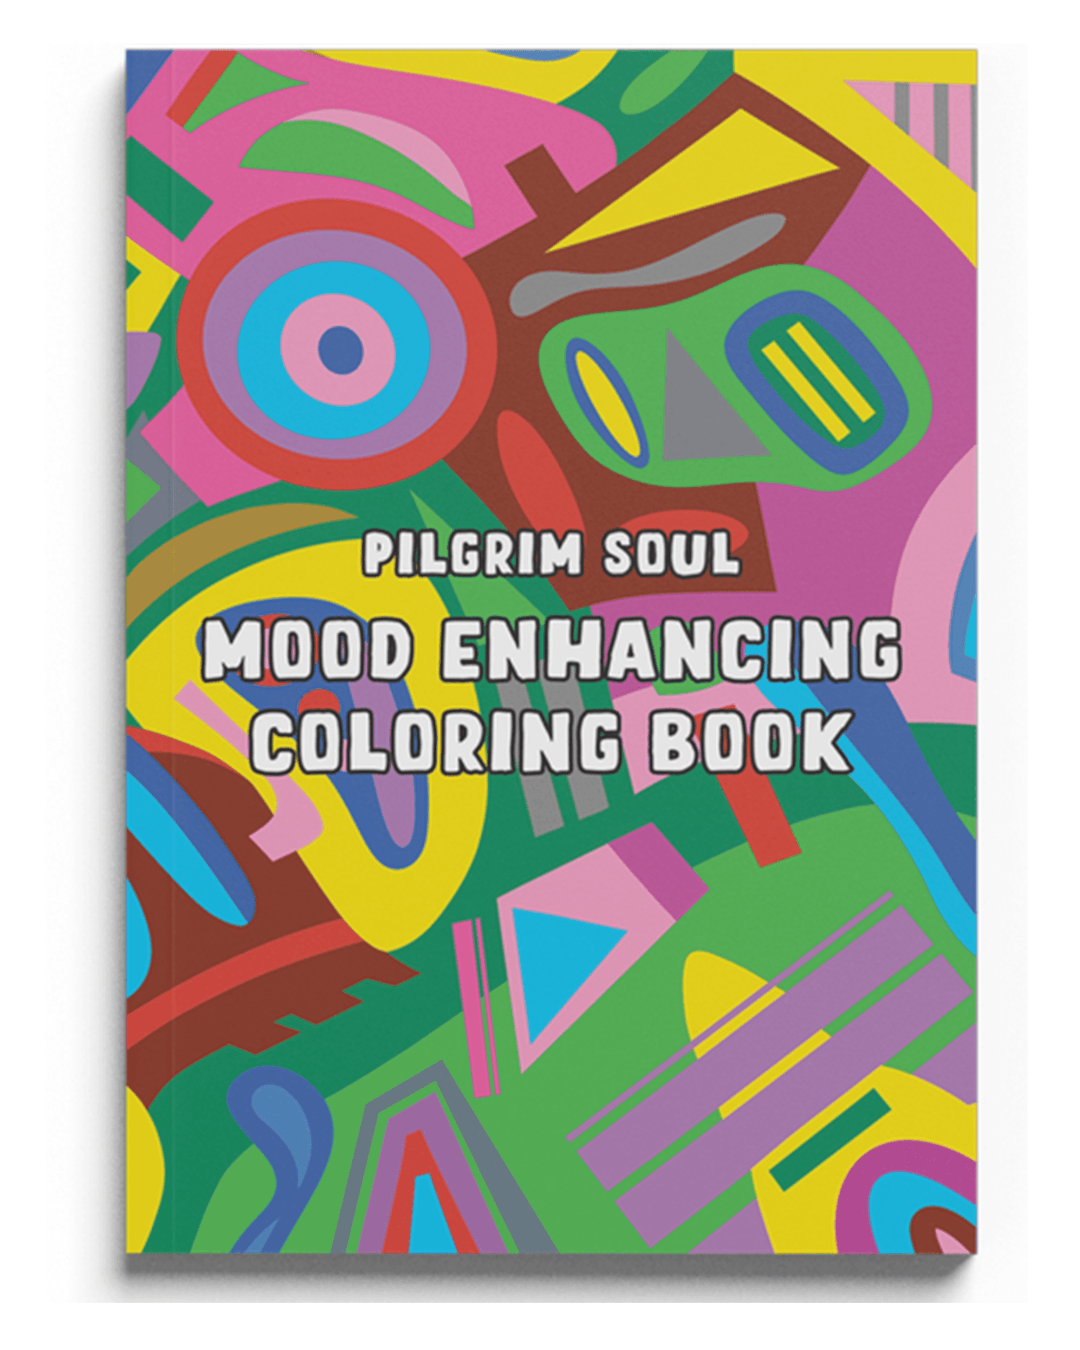 Mood Enhancing Coloring Book: VOL II